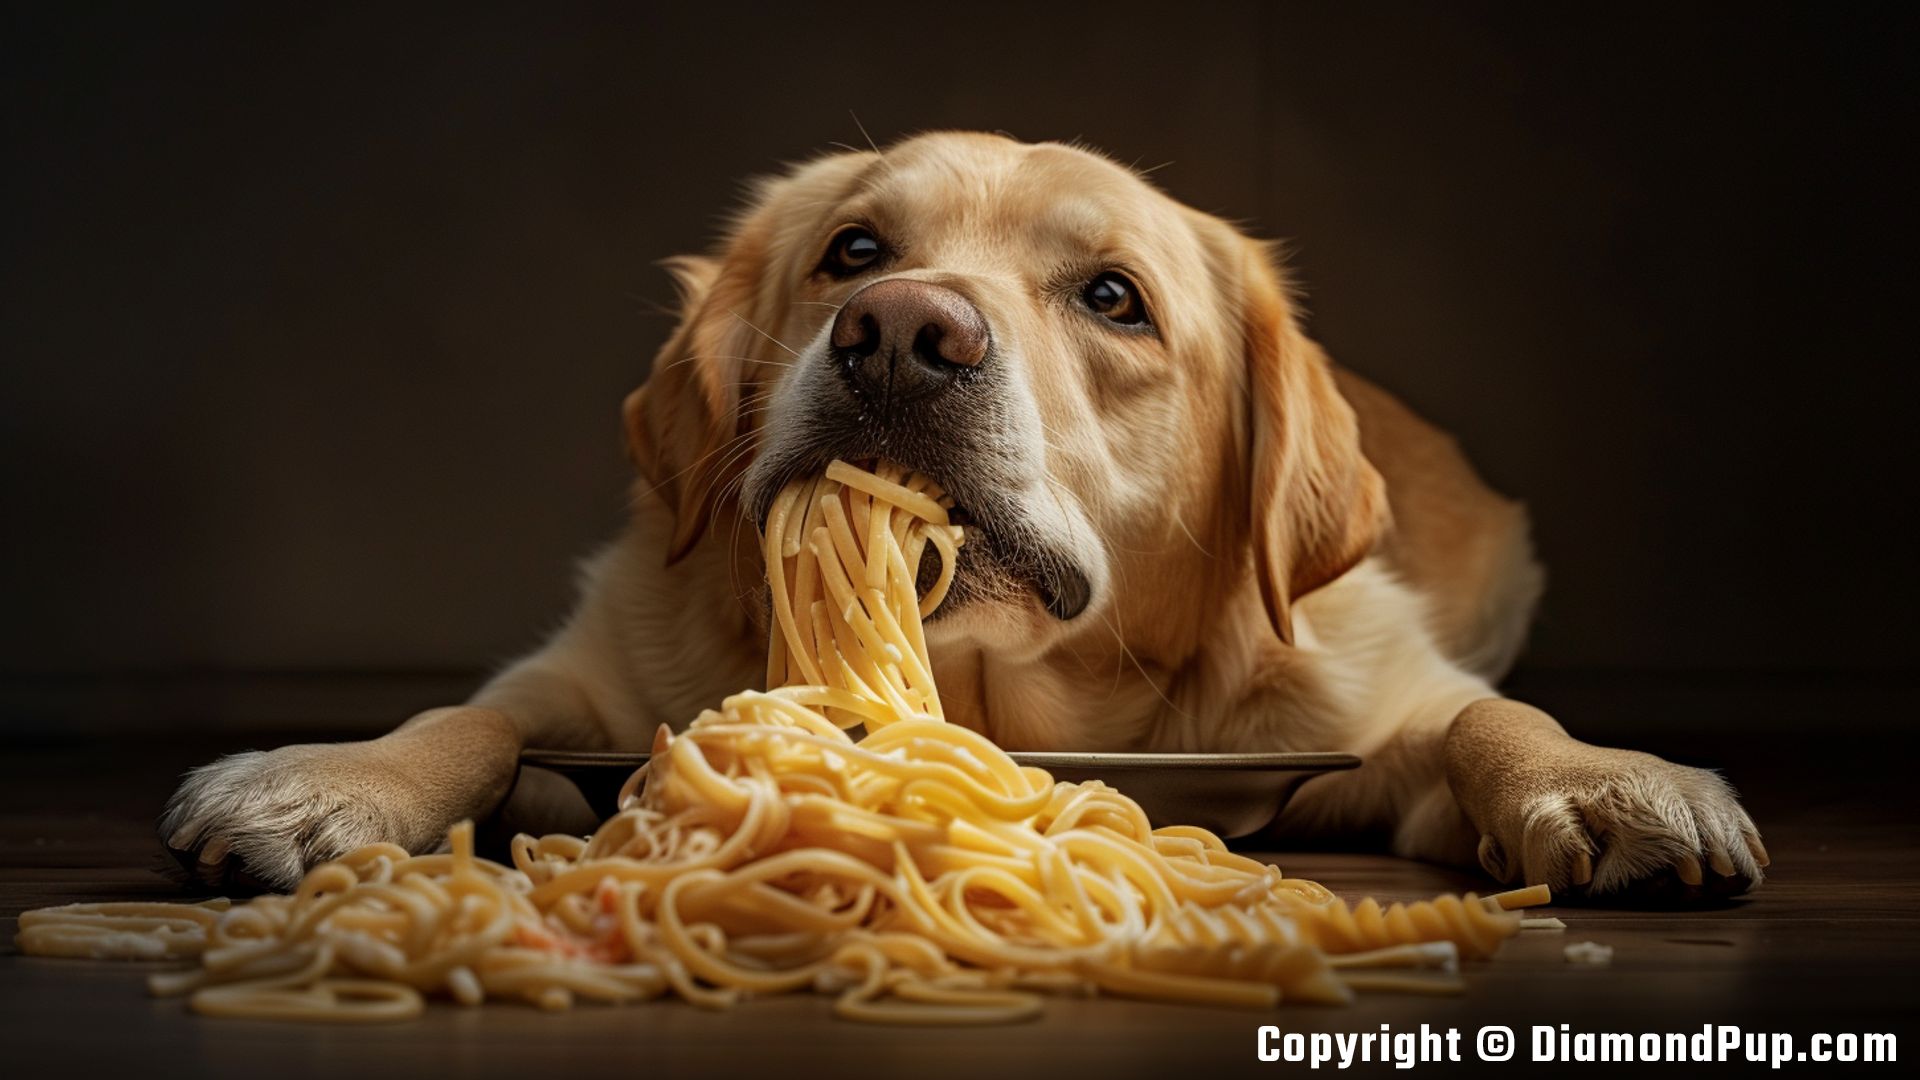 Image of a Cute Labrador Eating Pasta